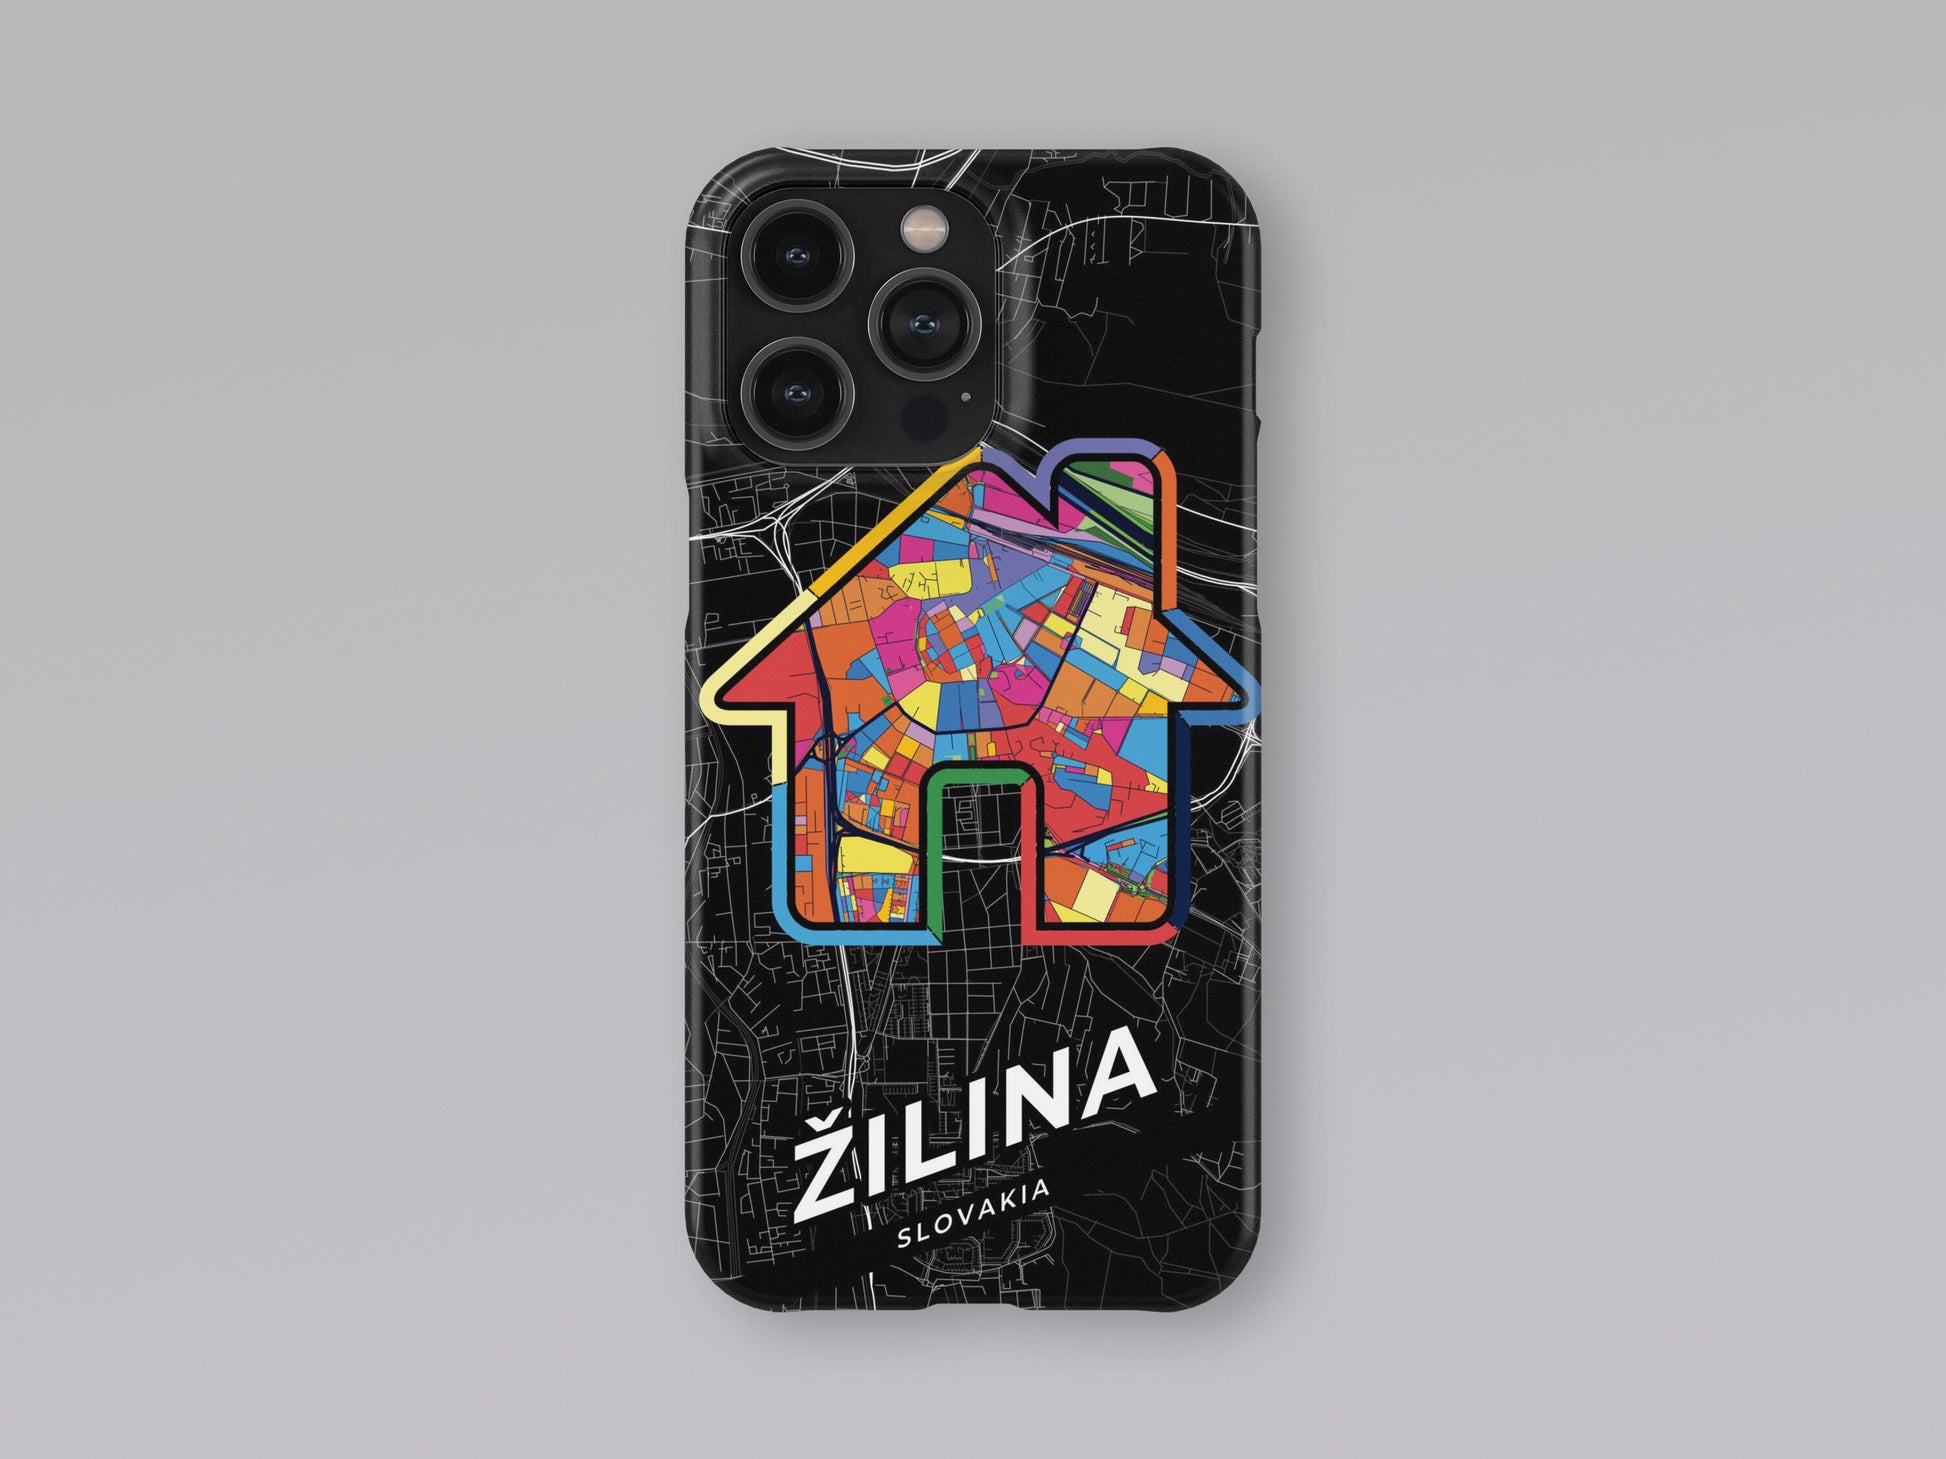 Žilina Slovakia slim phone case with colorful icon 3